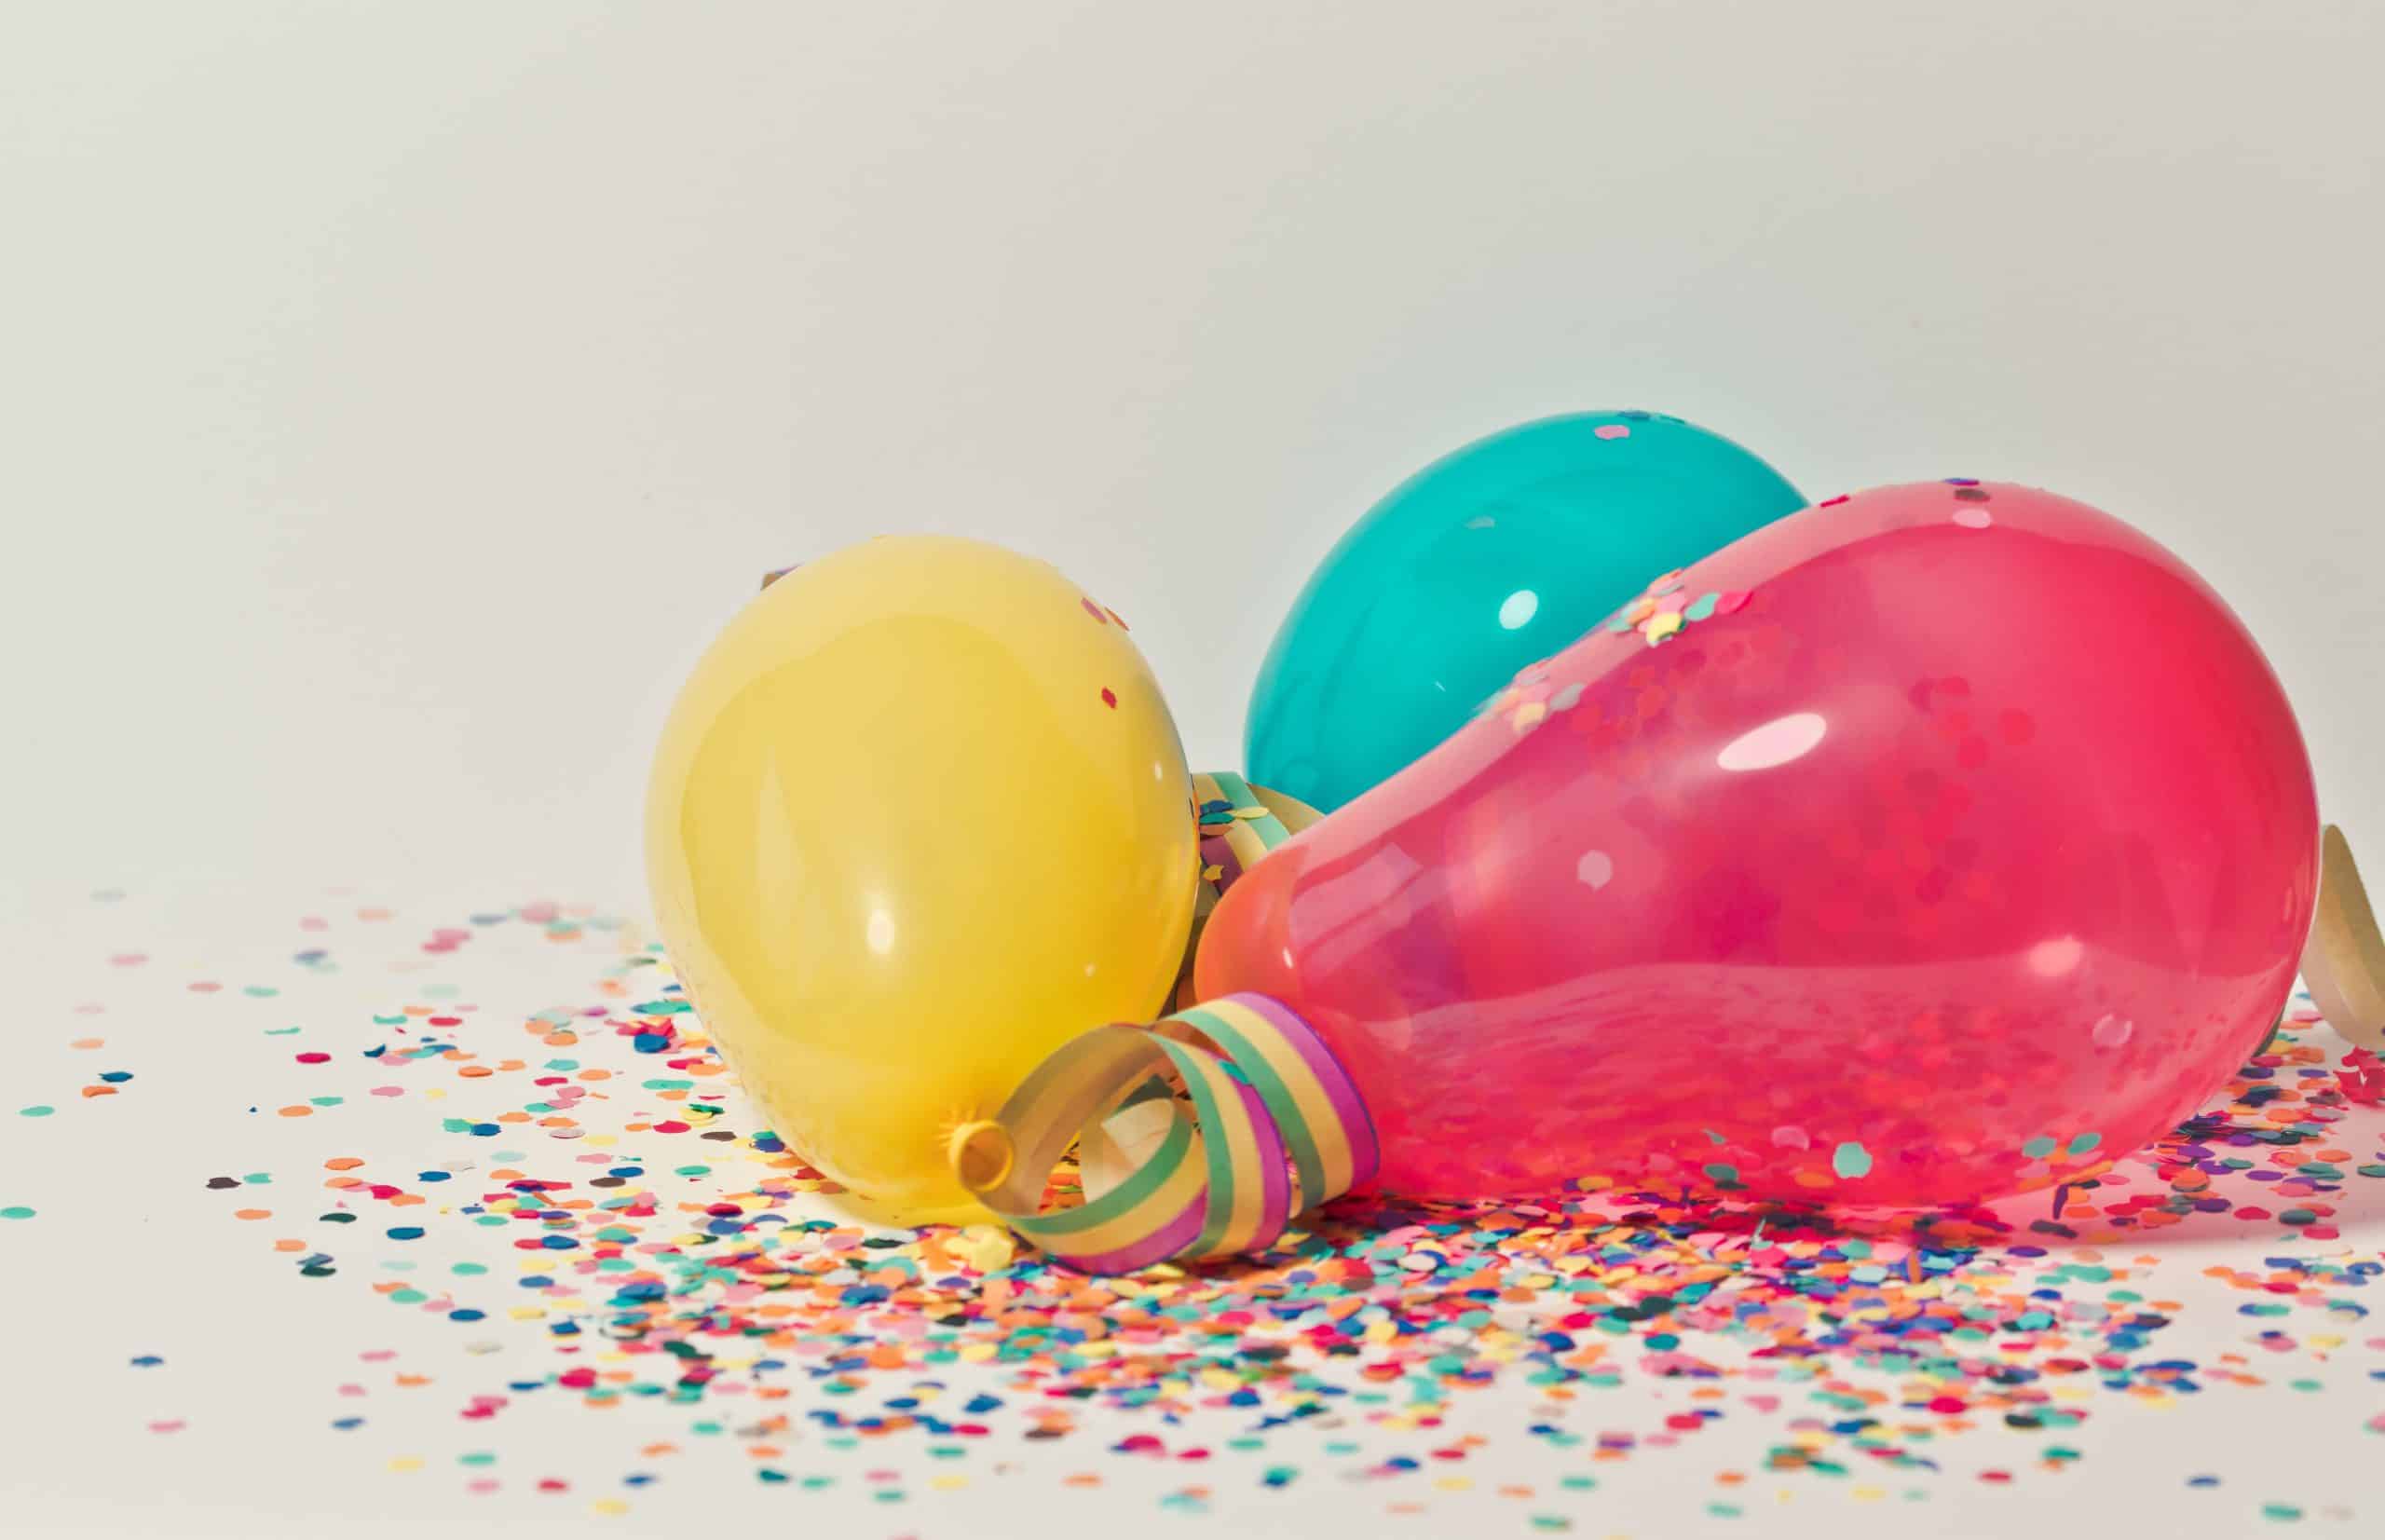 balloons-birthday-bright-796606